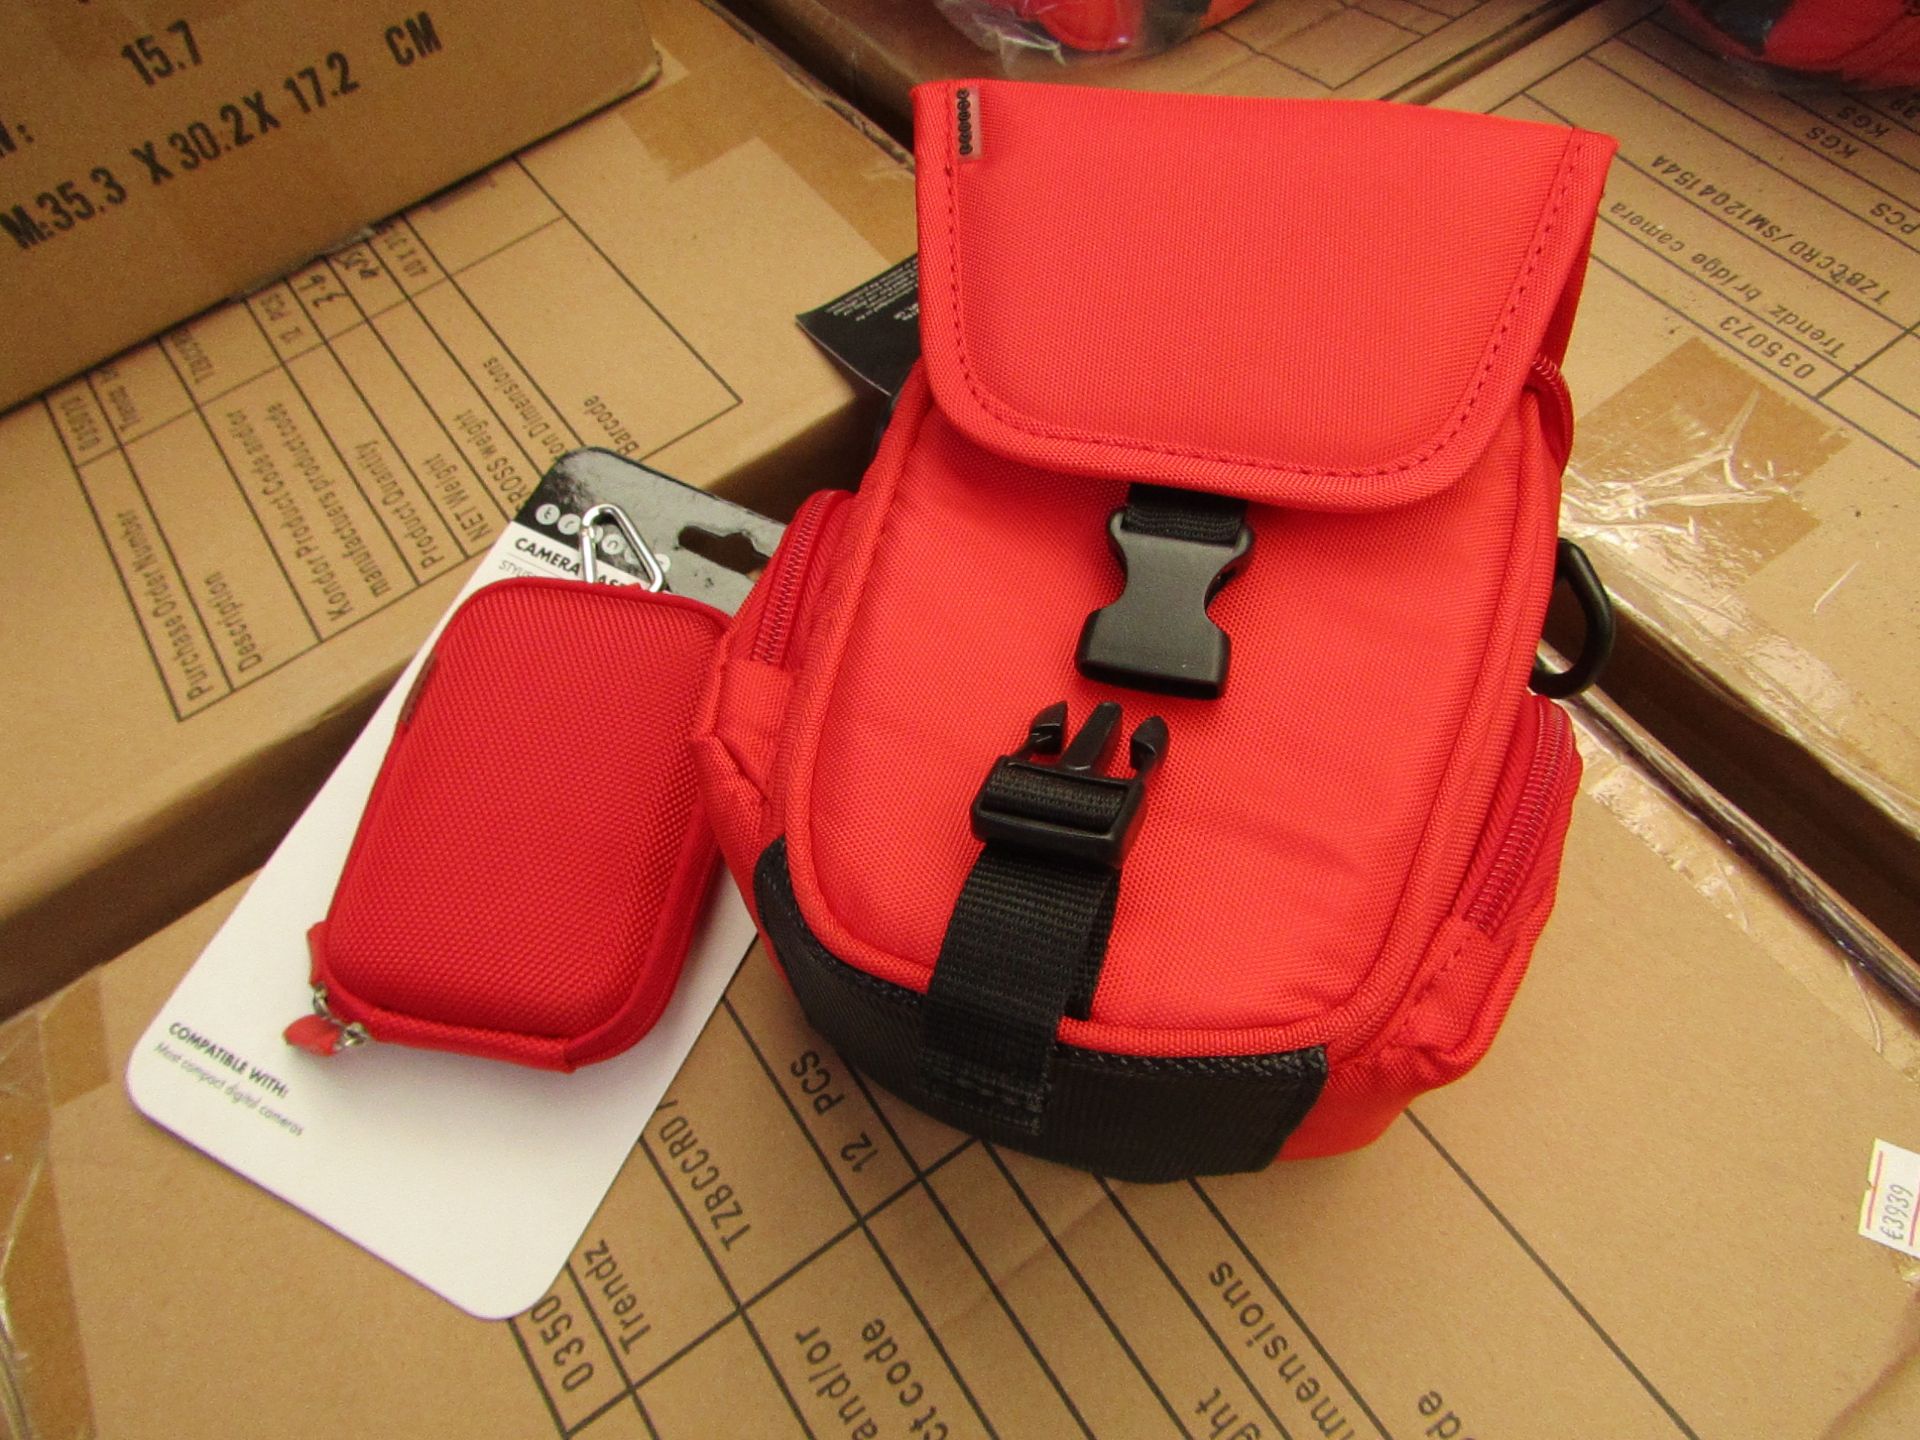 2x Trendz bridge camera case red, new in packaging.